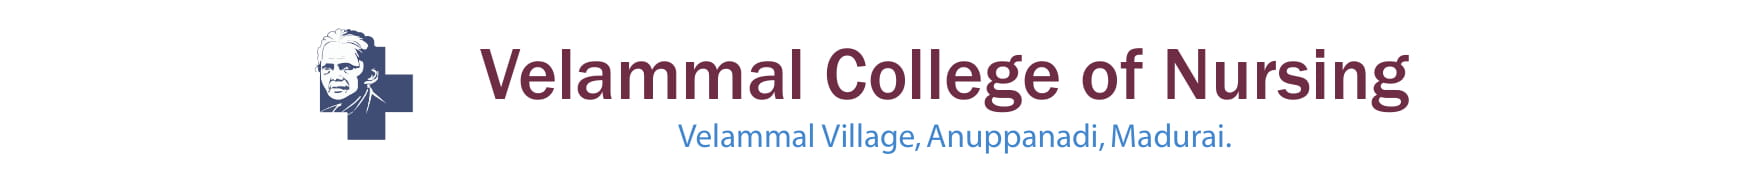 Velammal College of Nursing